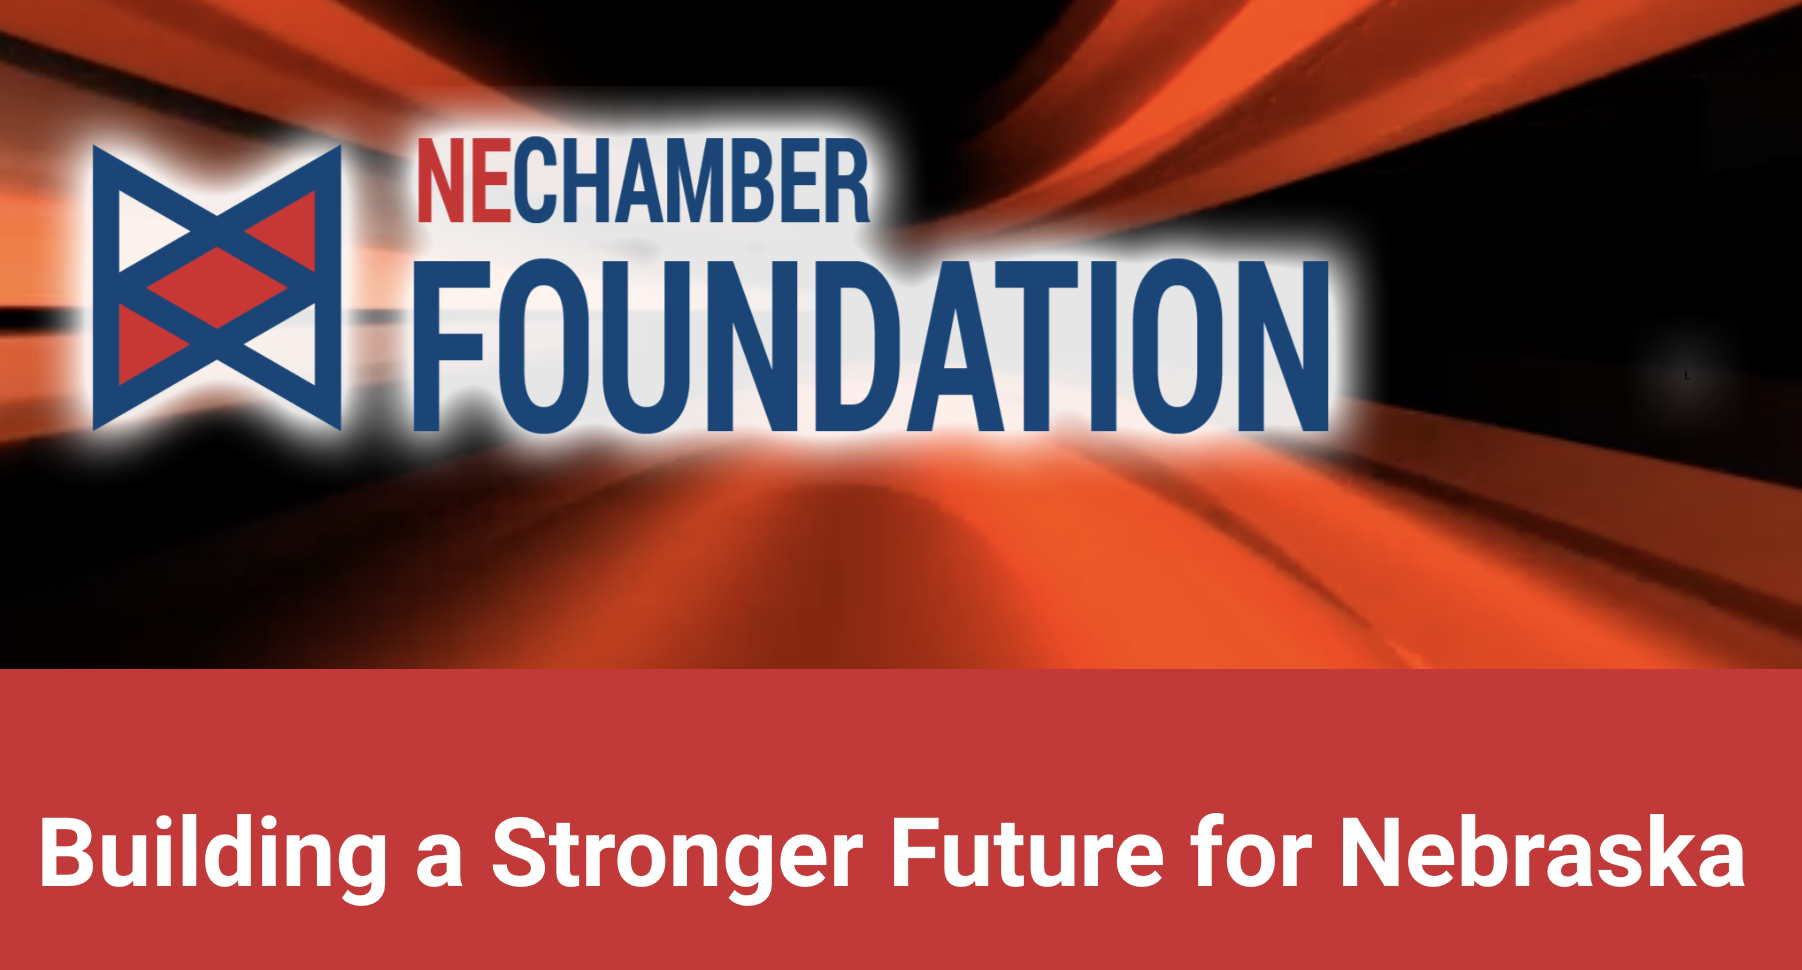 Nebraska’s Economic Landscape: Challenges, Opportunities and Strategic Recommendations